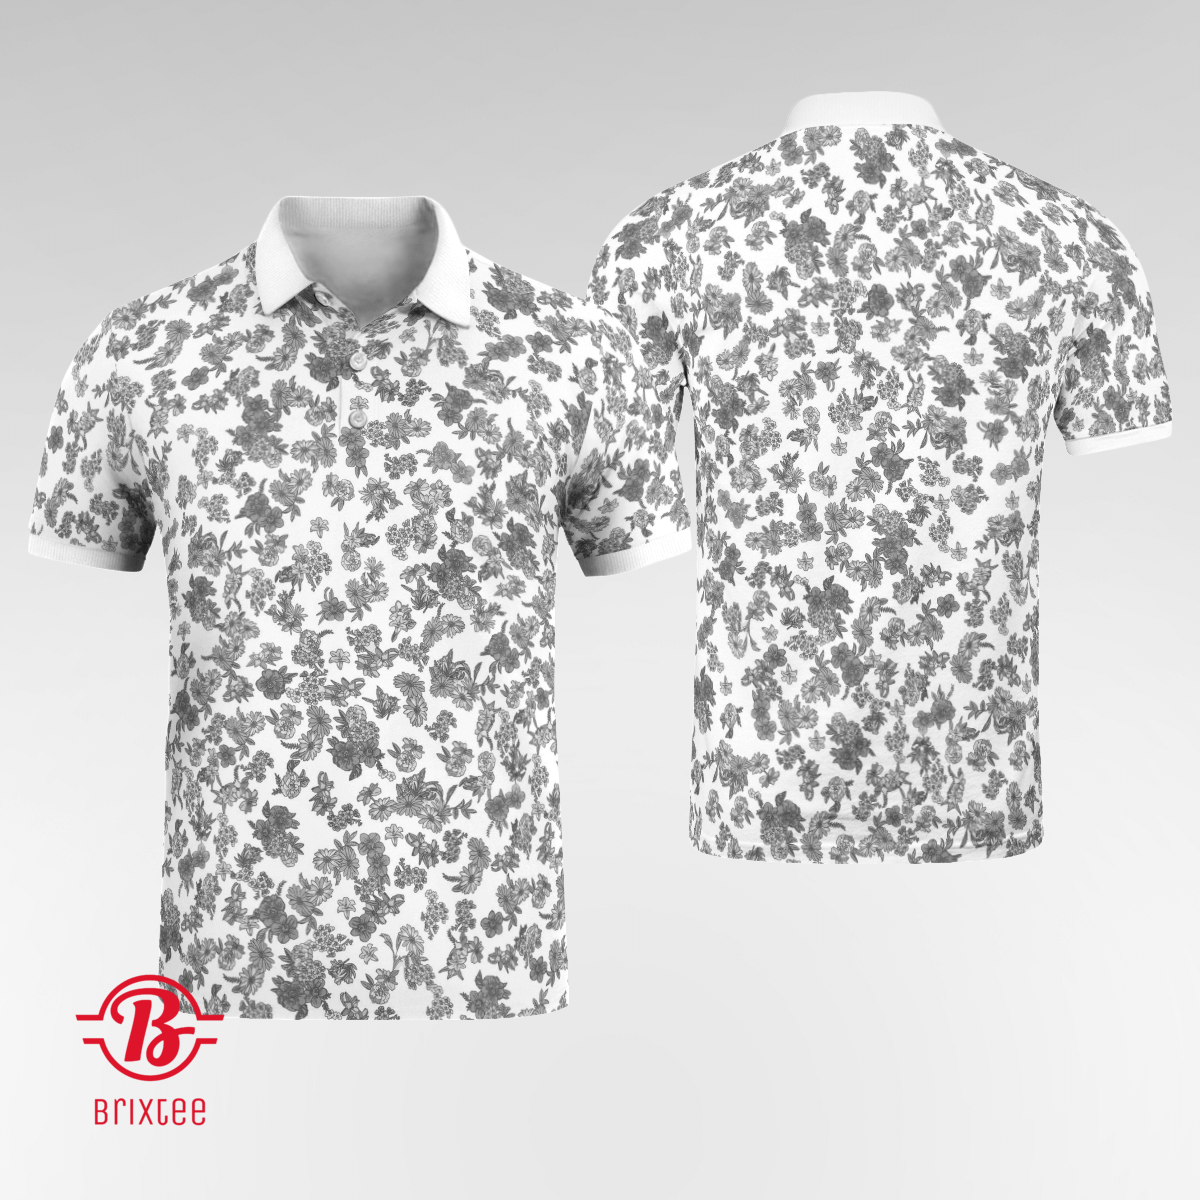 Golf Shirt - NK DF Player Floral Print